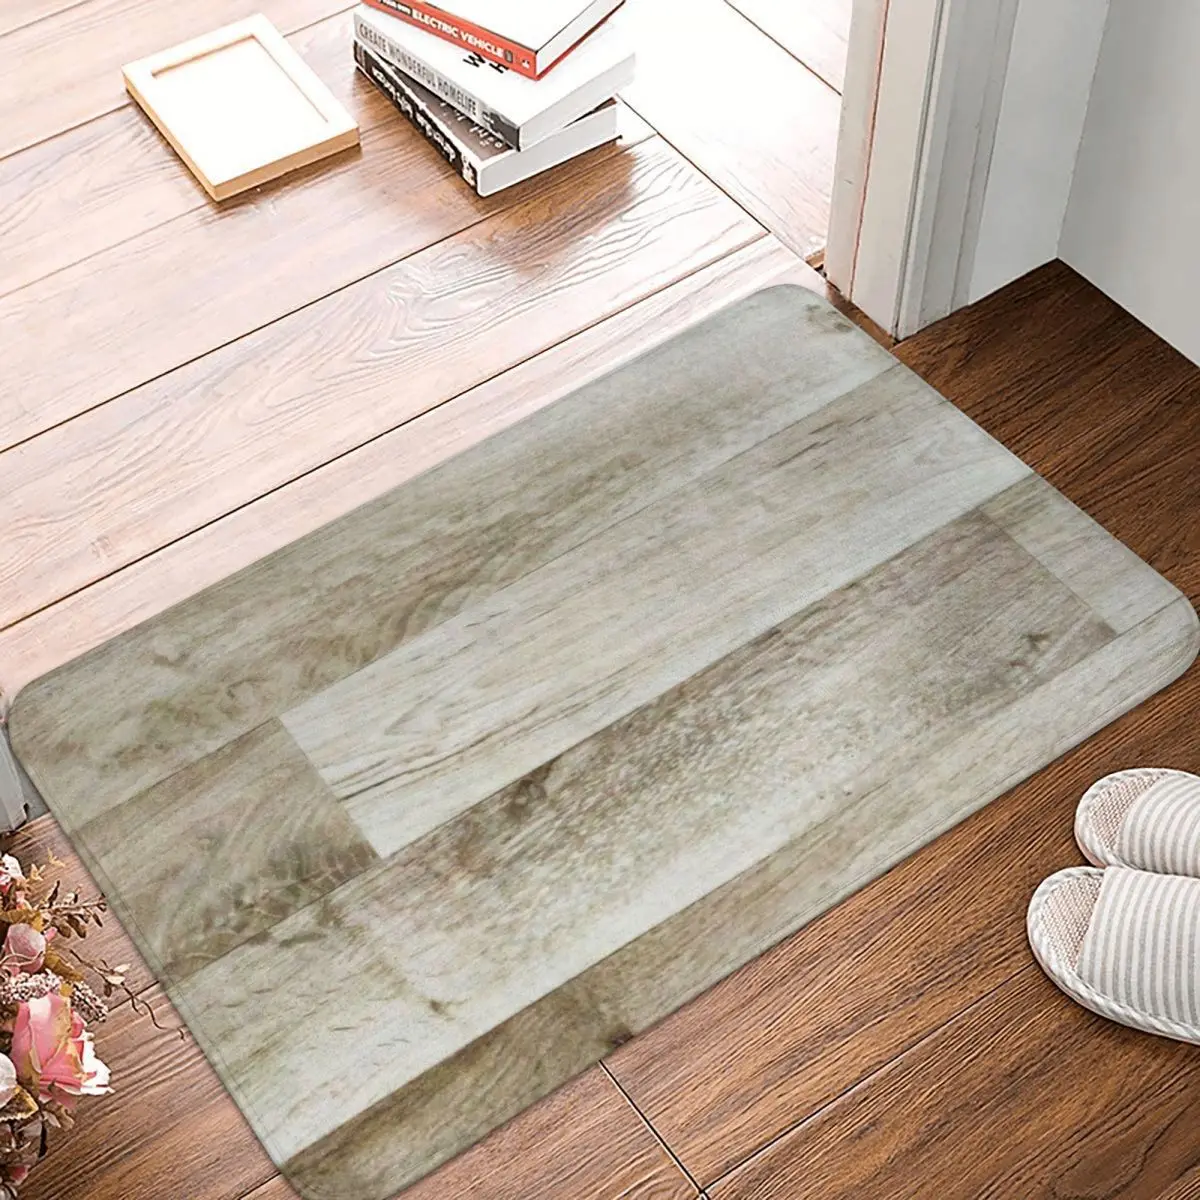 

Rustic Old Wood Doormat Carpet Mat Rug Polyester PVC Anti-slip Floor Decor Bath Bathroom Kitchen Bedroom 40x60